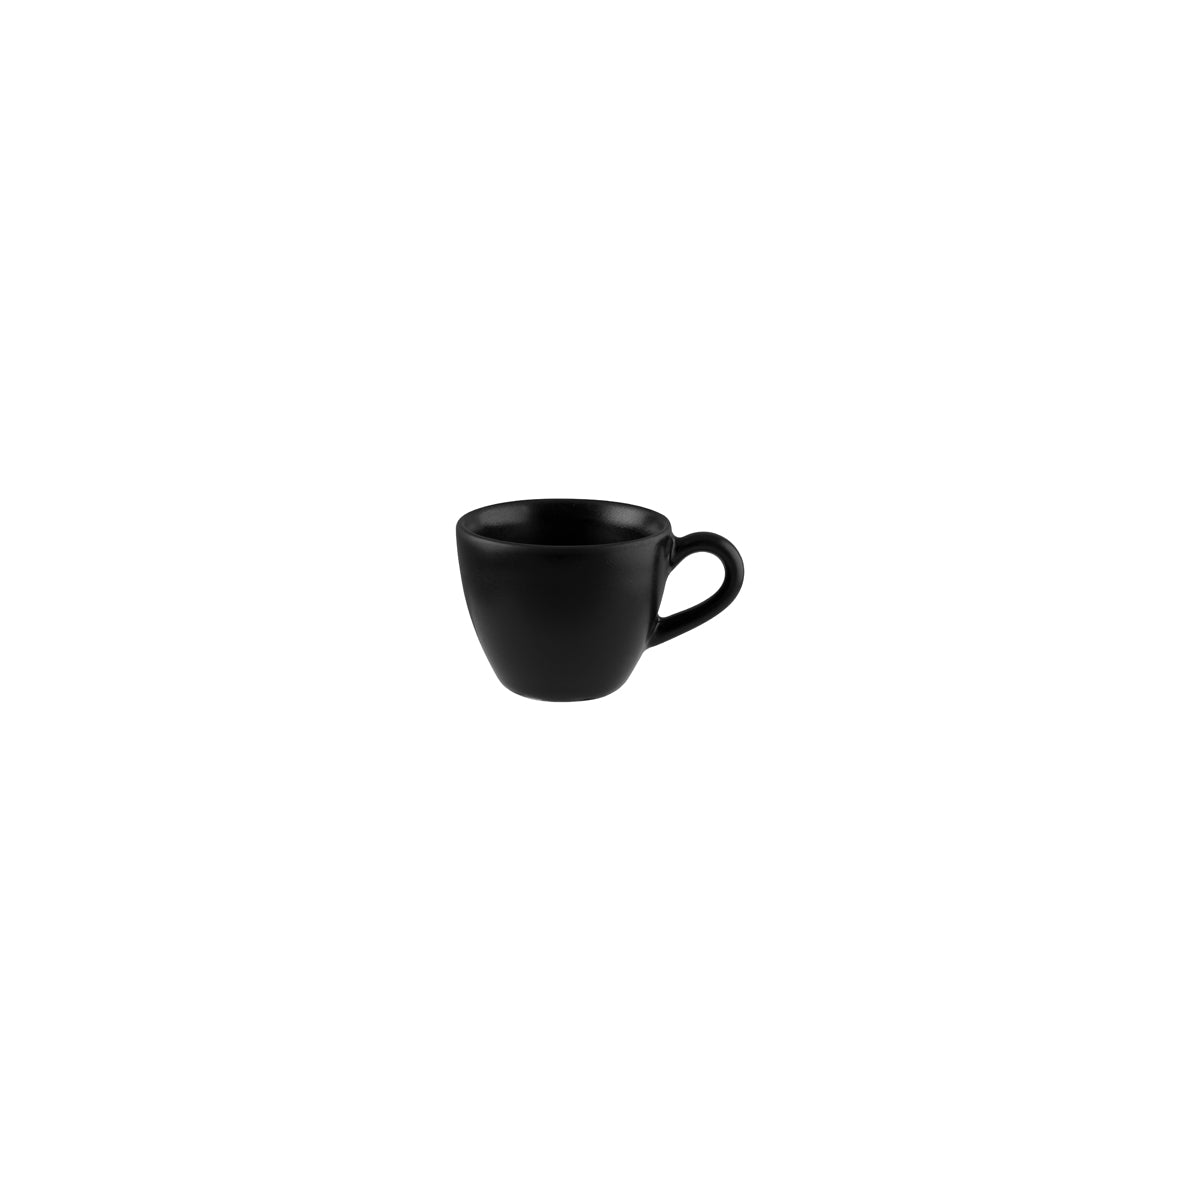 130780 Bonna Notte Black Turkish Coffee Cup 90x75mm/70ml Tomkin Australia Hospitality Supplies